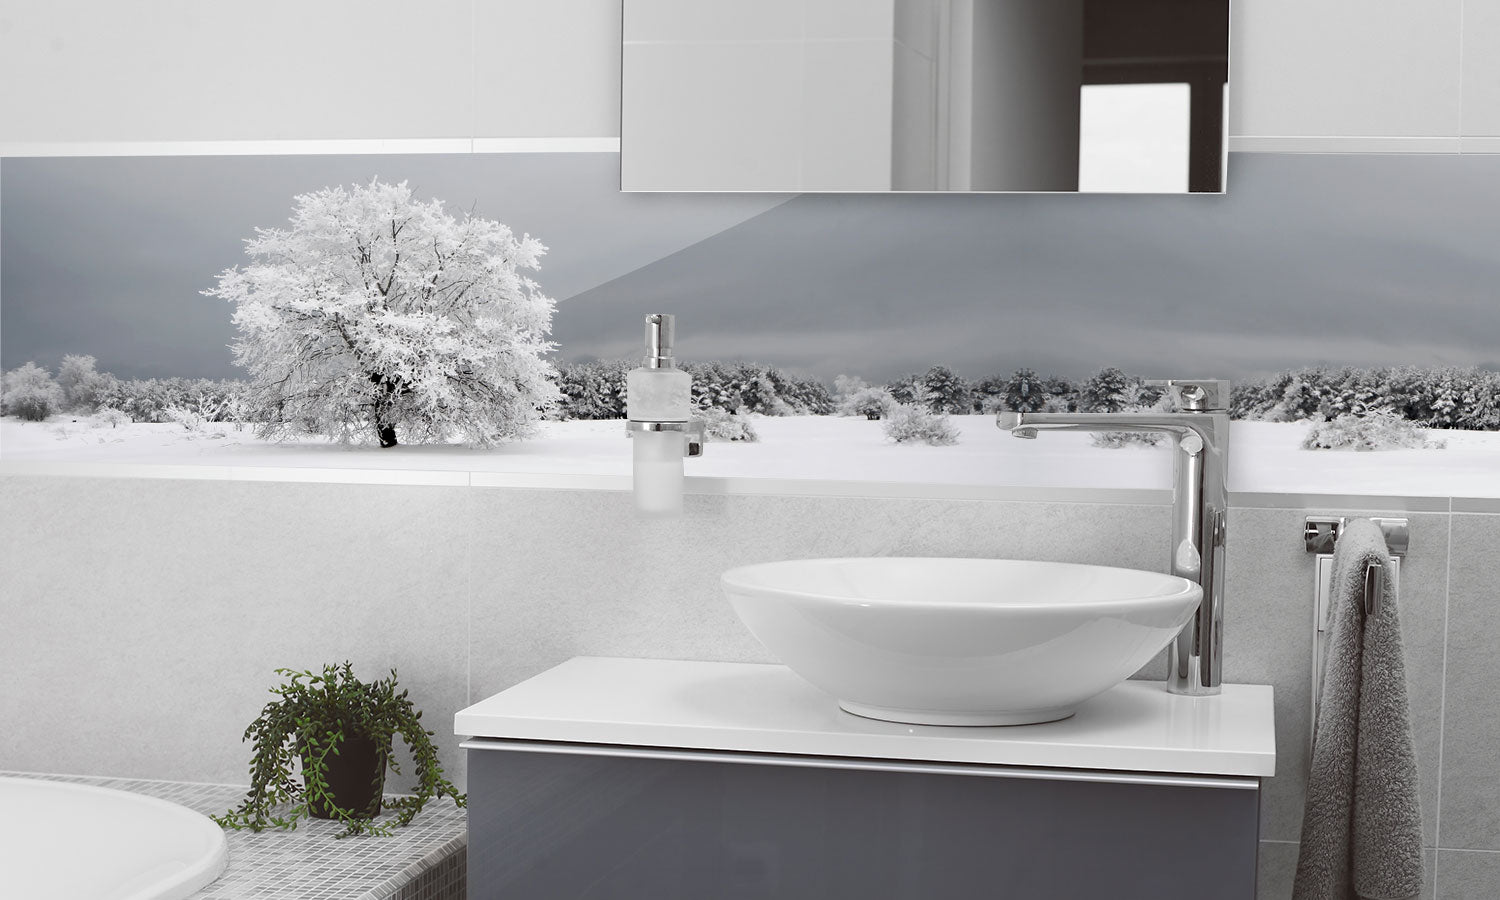 Paneli za kuhinje Frozen tree  -  Stakleni / PVC ploče / Pleksiglas -  sa printom za kuhinju, Zidne obloge PKU334